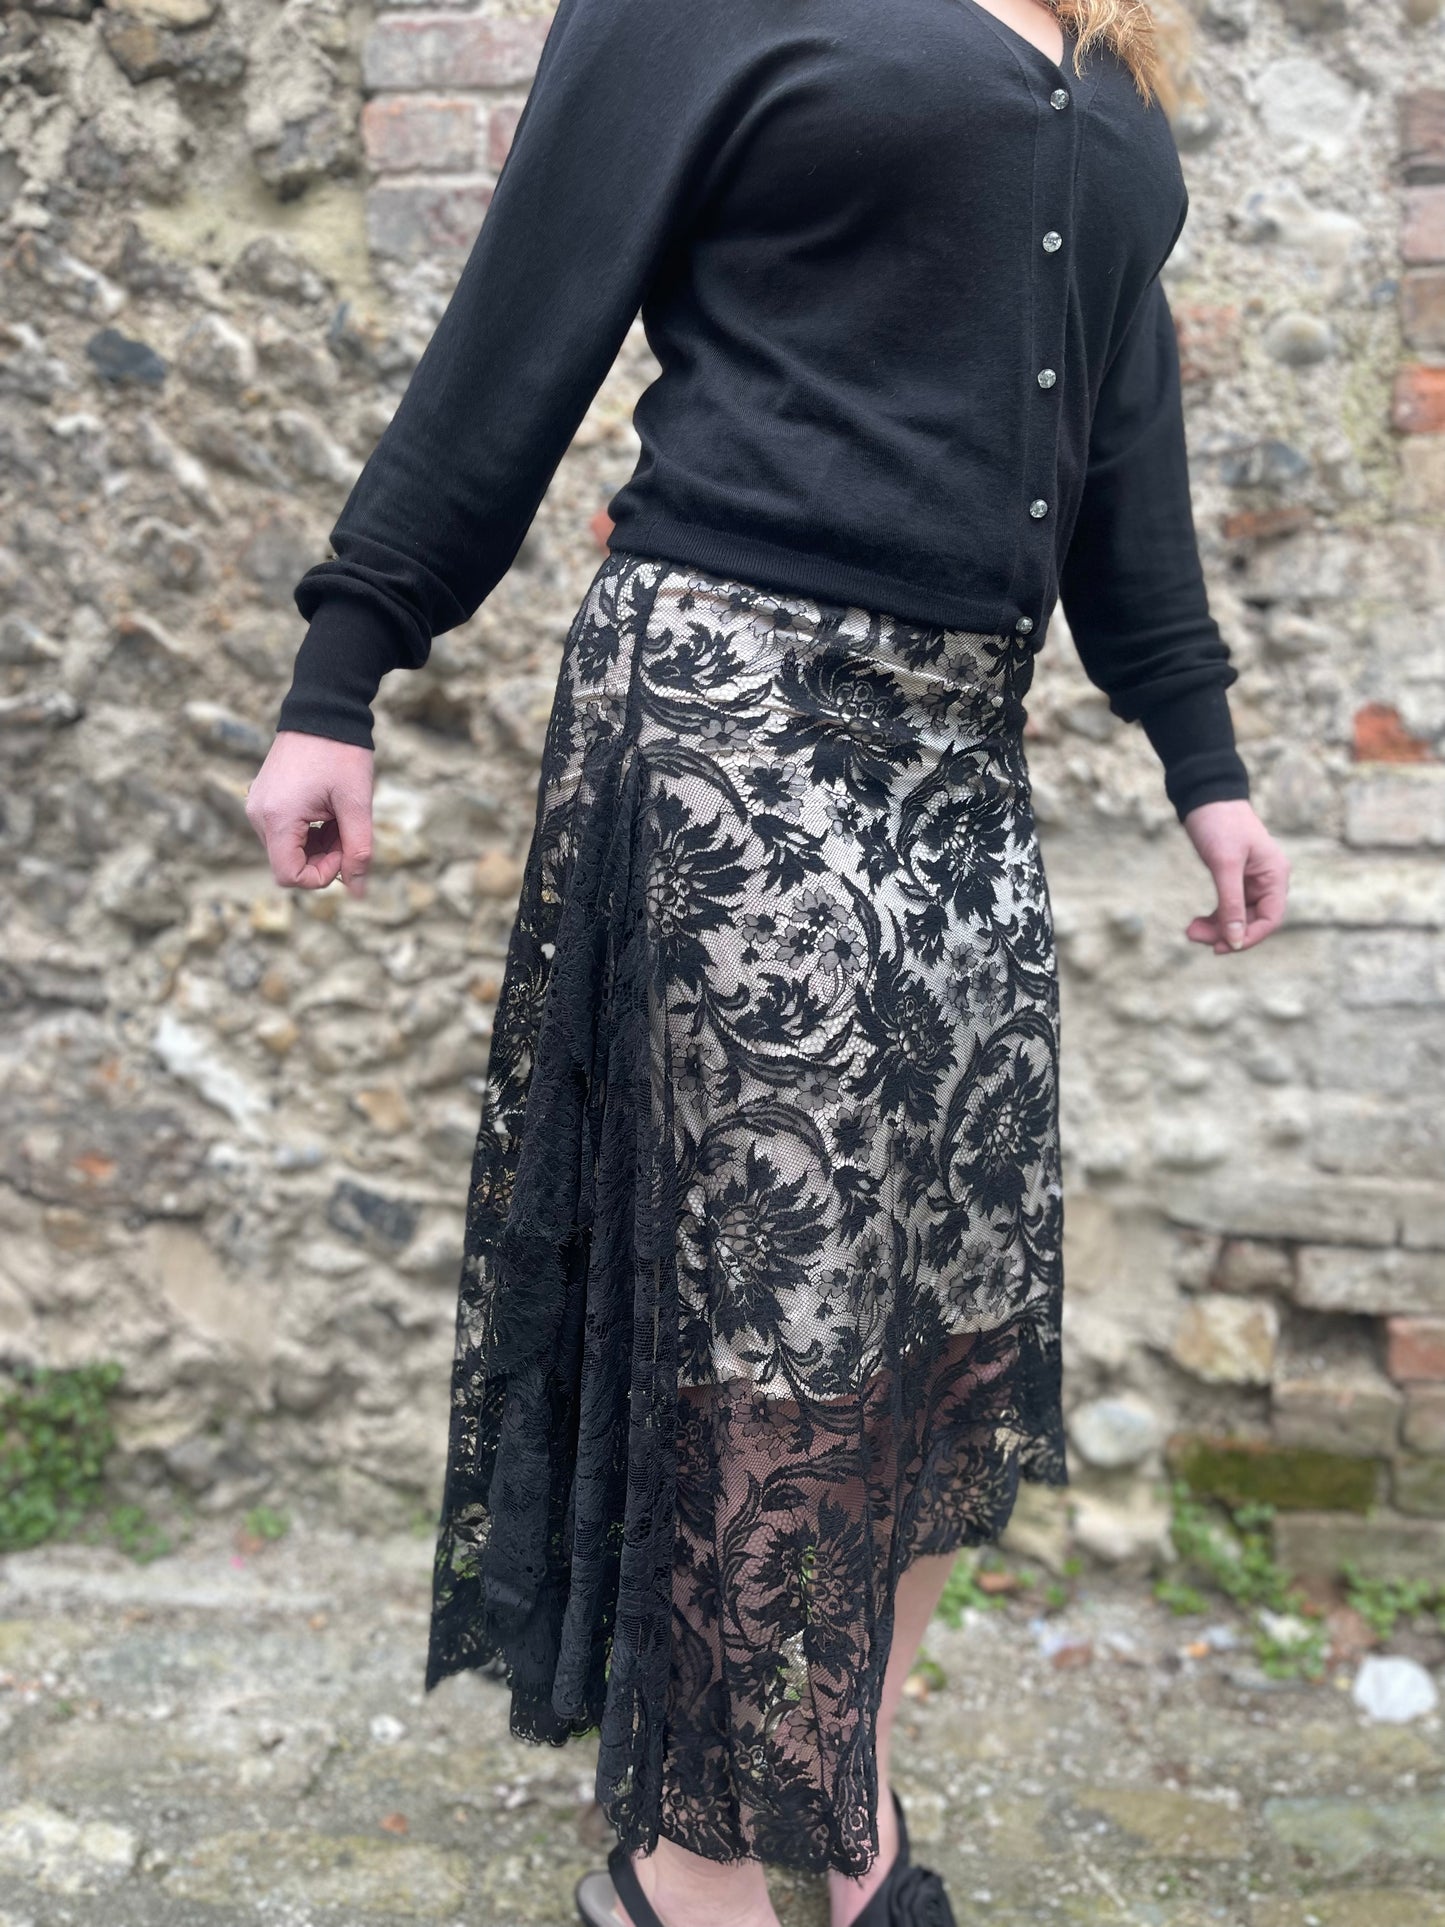 Vintage Hamish Morrow Lace Skirt